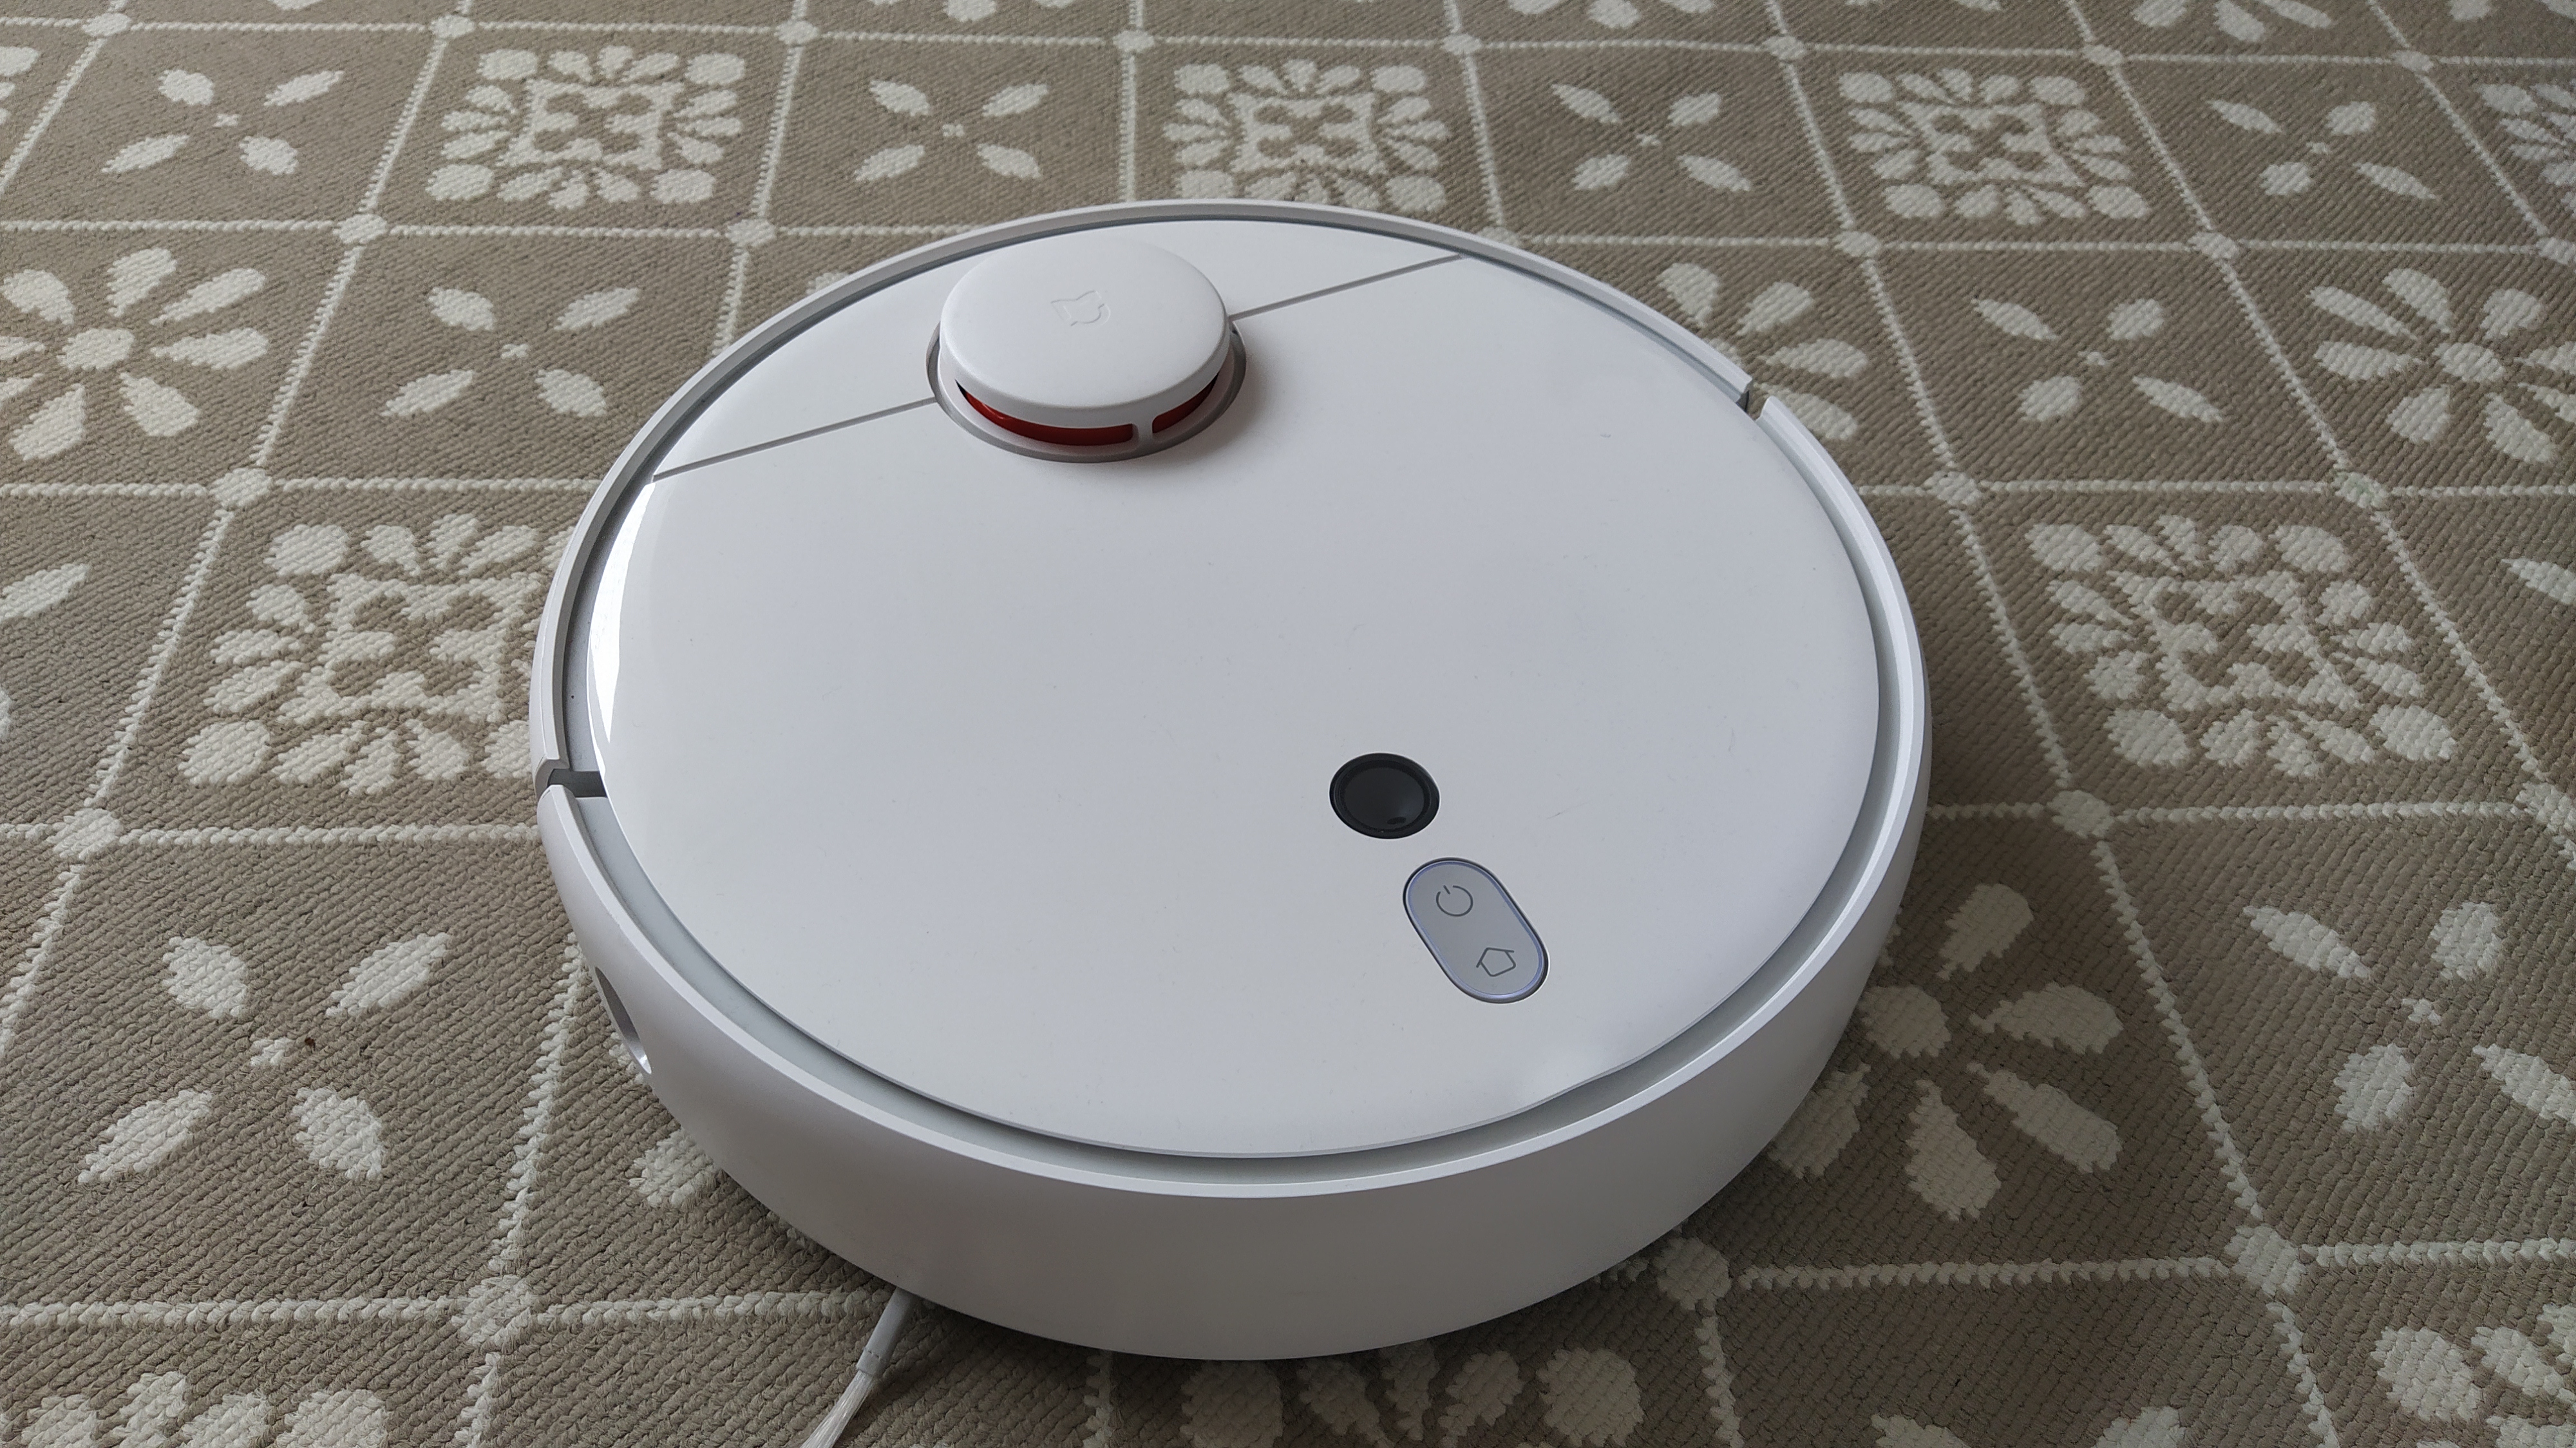 Xiaomi Mi Robot Vacuum Cleaner 1S